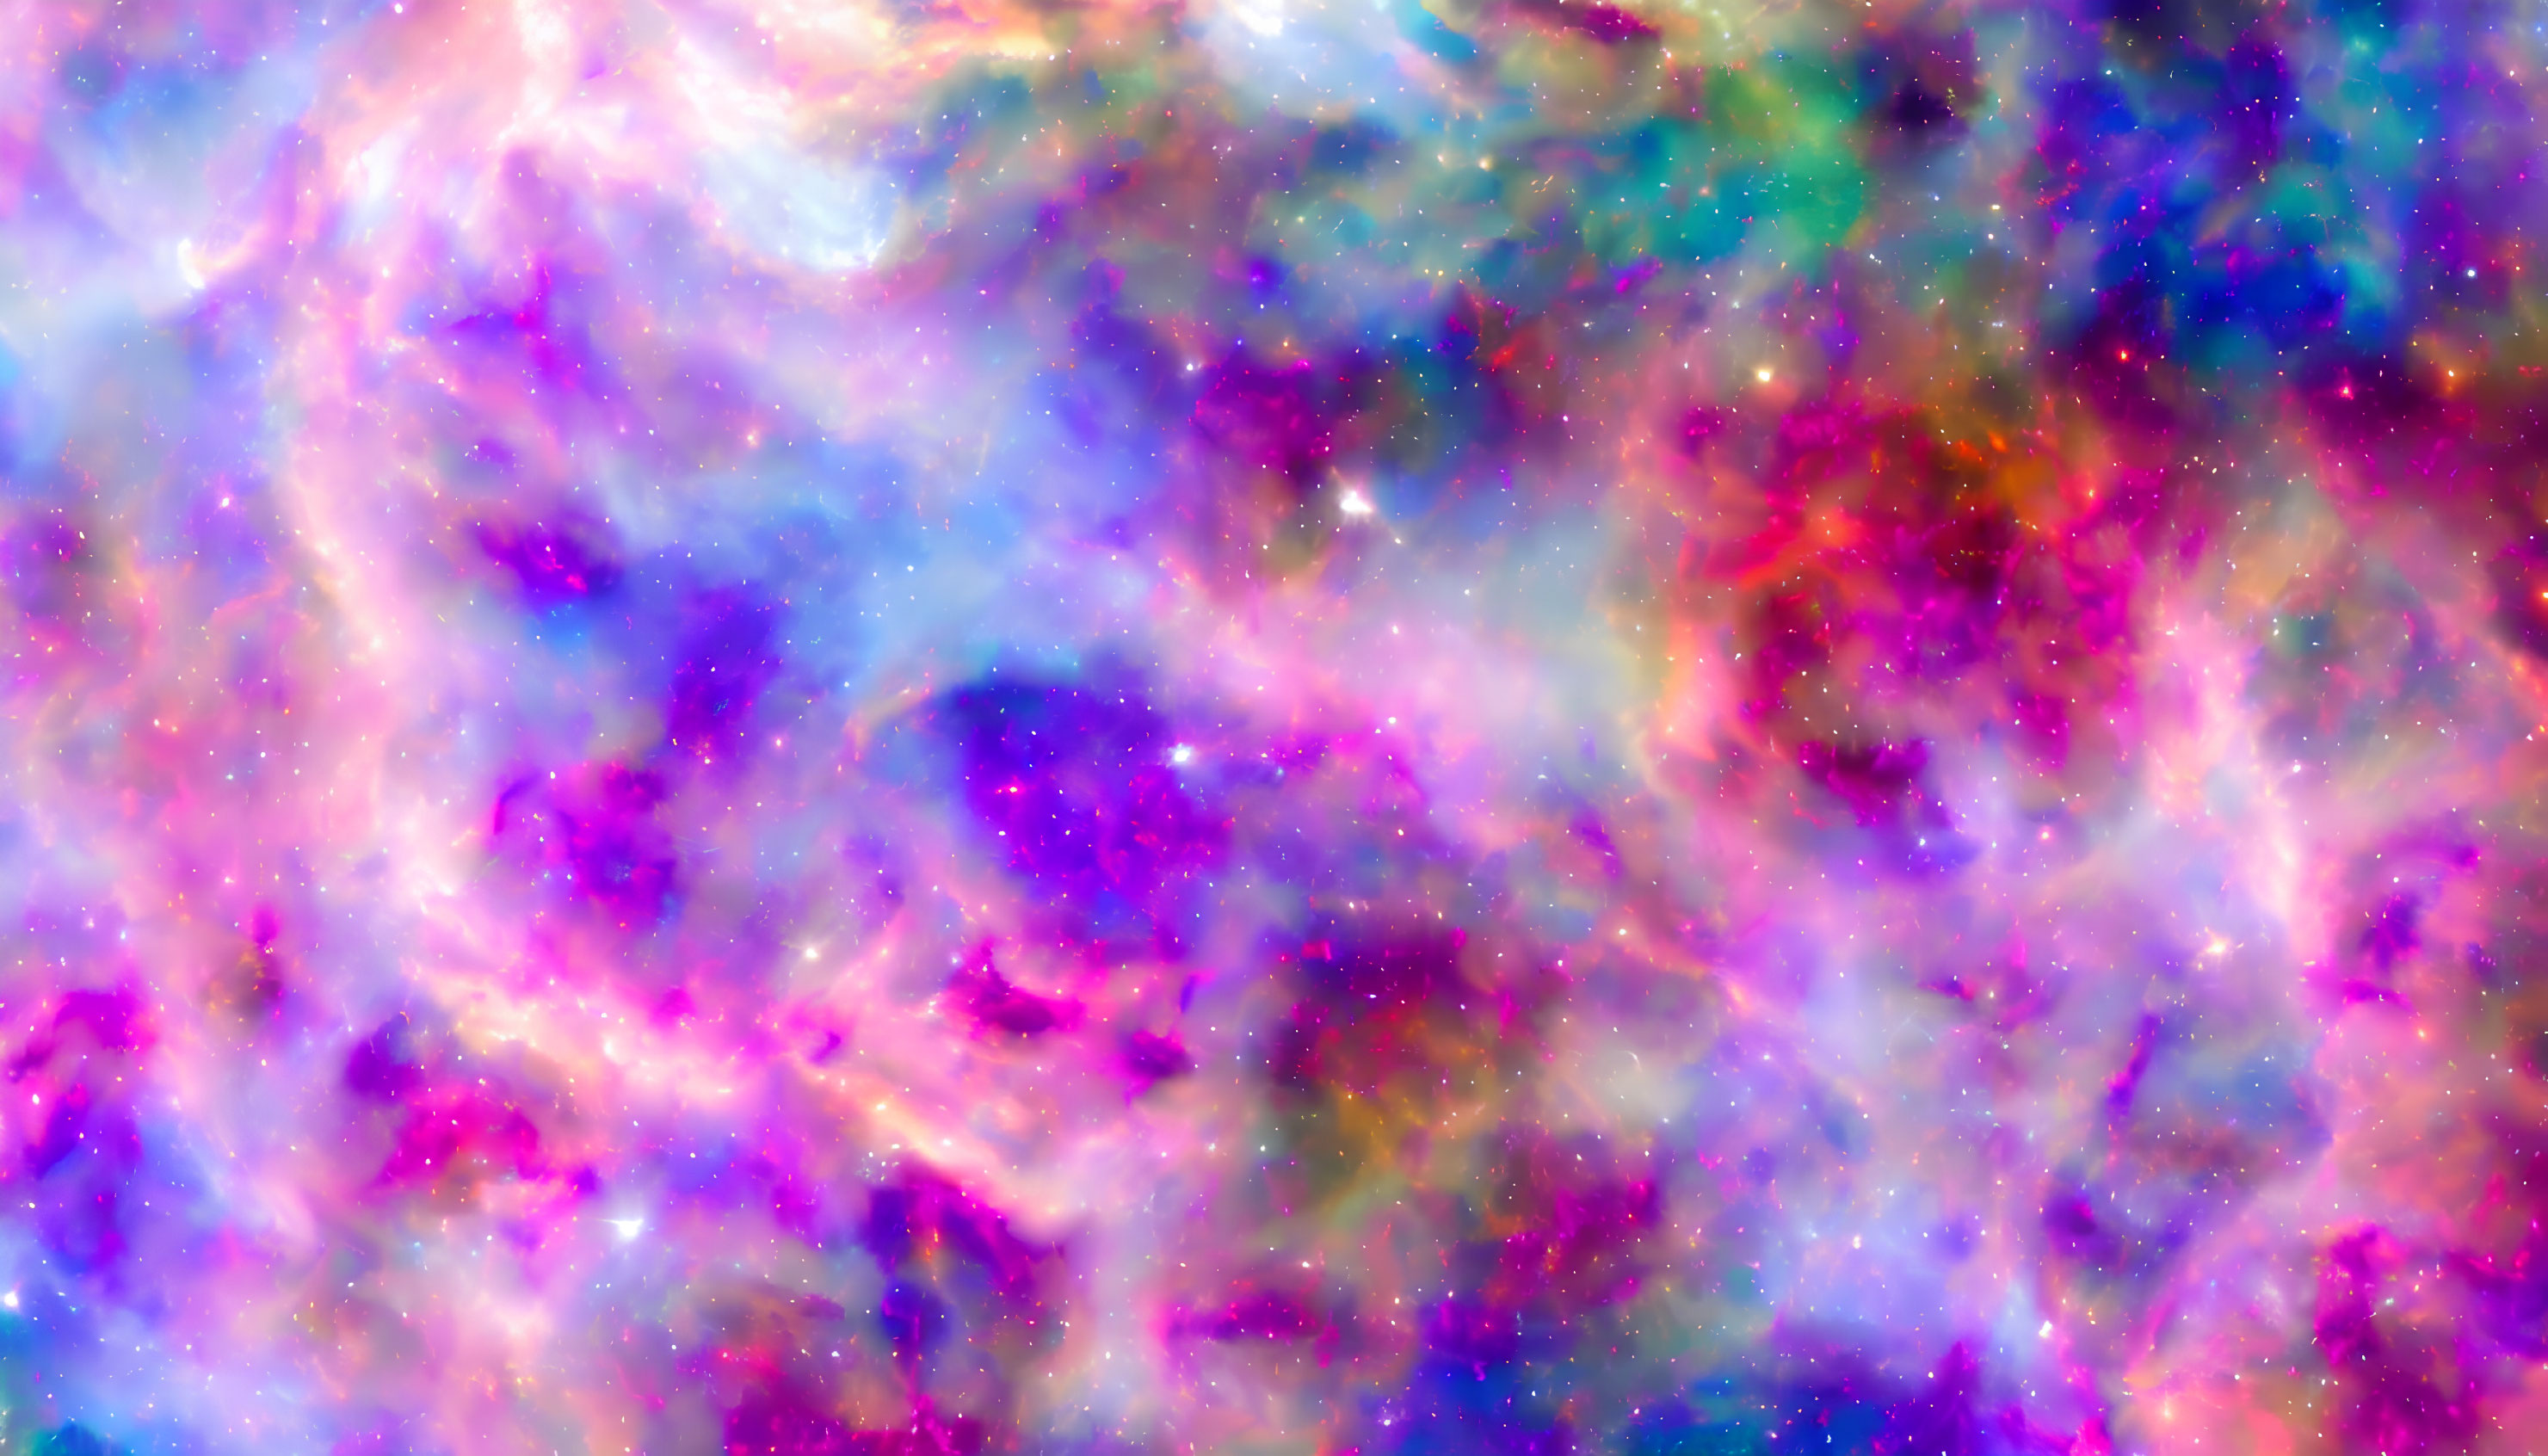 Colorful cosmic nebula with purple, blue, and pink swirls and stars